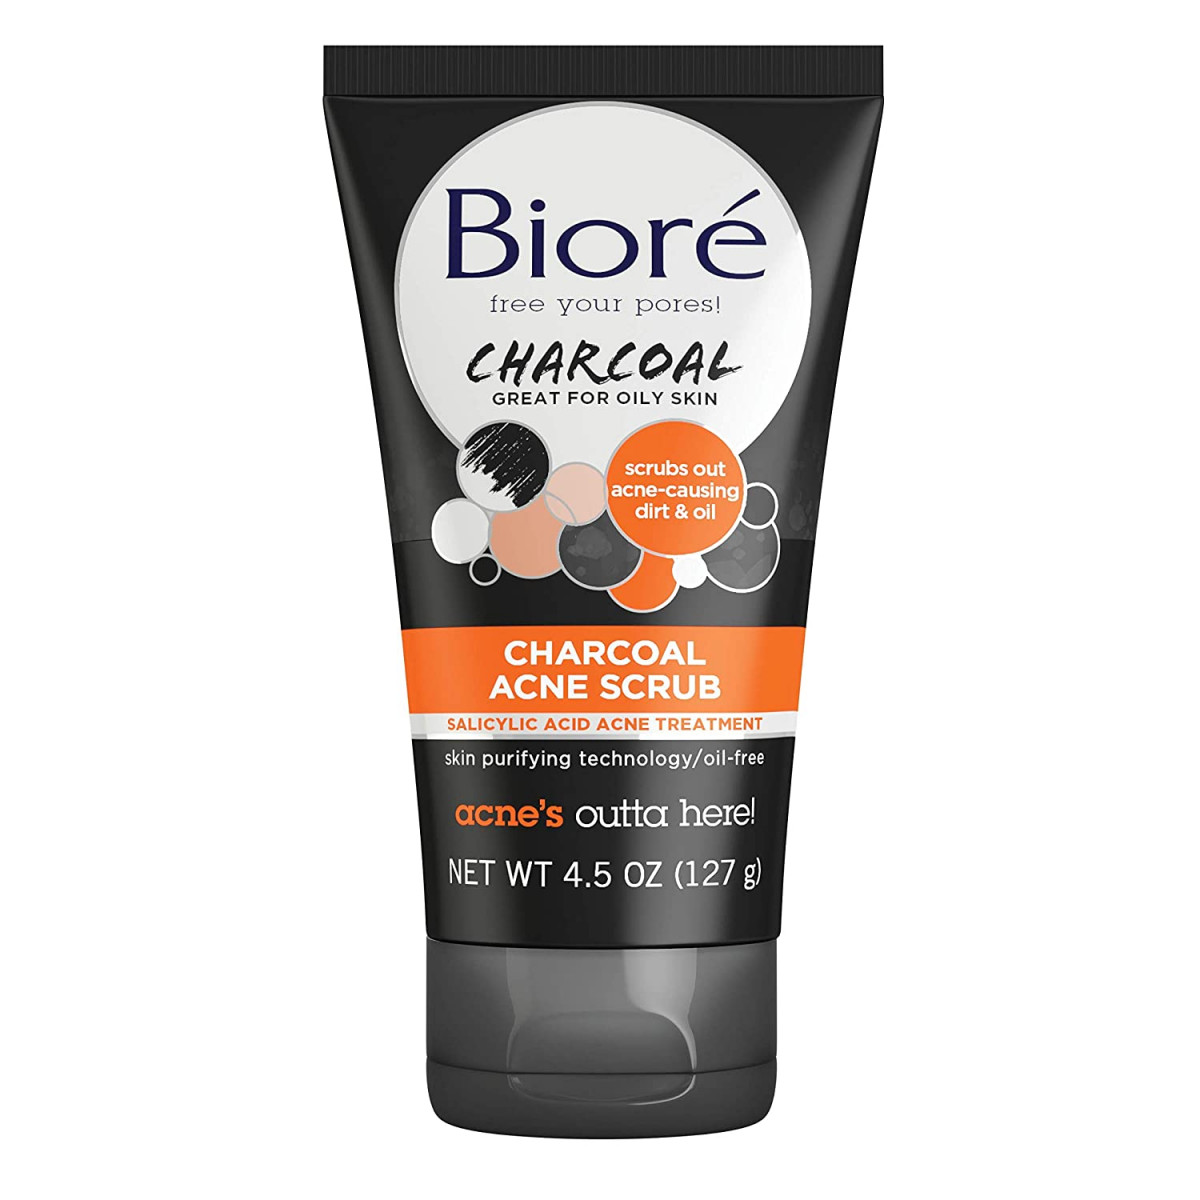 Alea's Deals Bioré Charcoal Acne Face Scrub Up to 50% Off! Was $7.99 ($1.78 / Ounce)!  